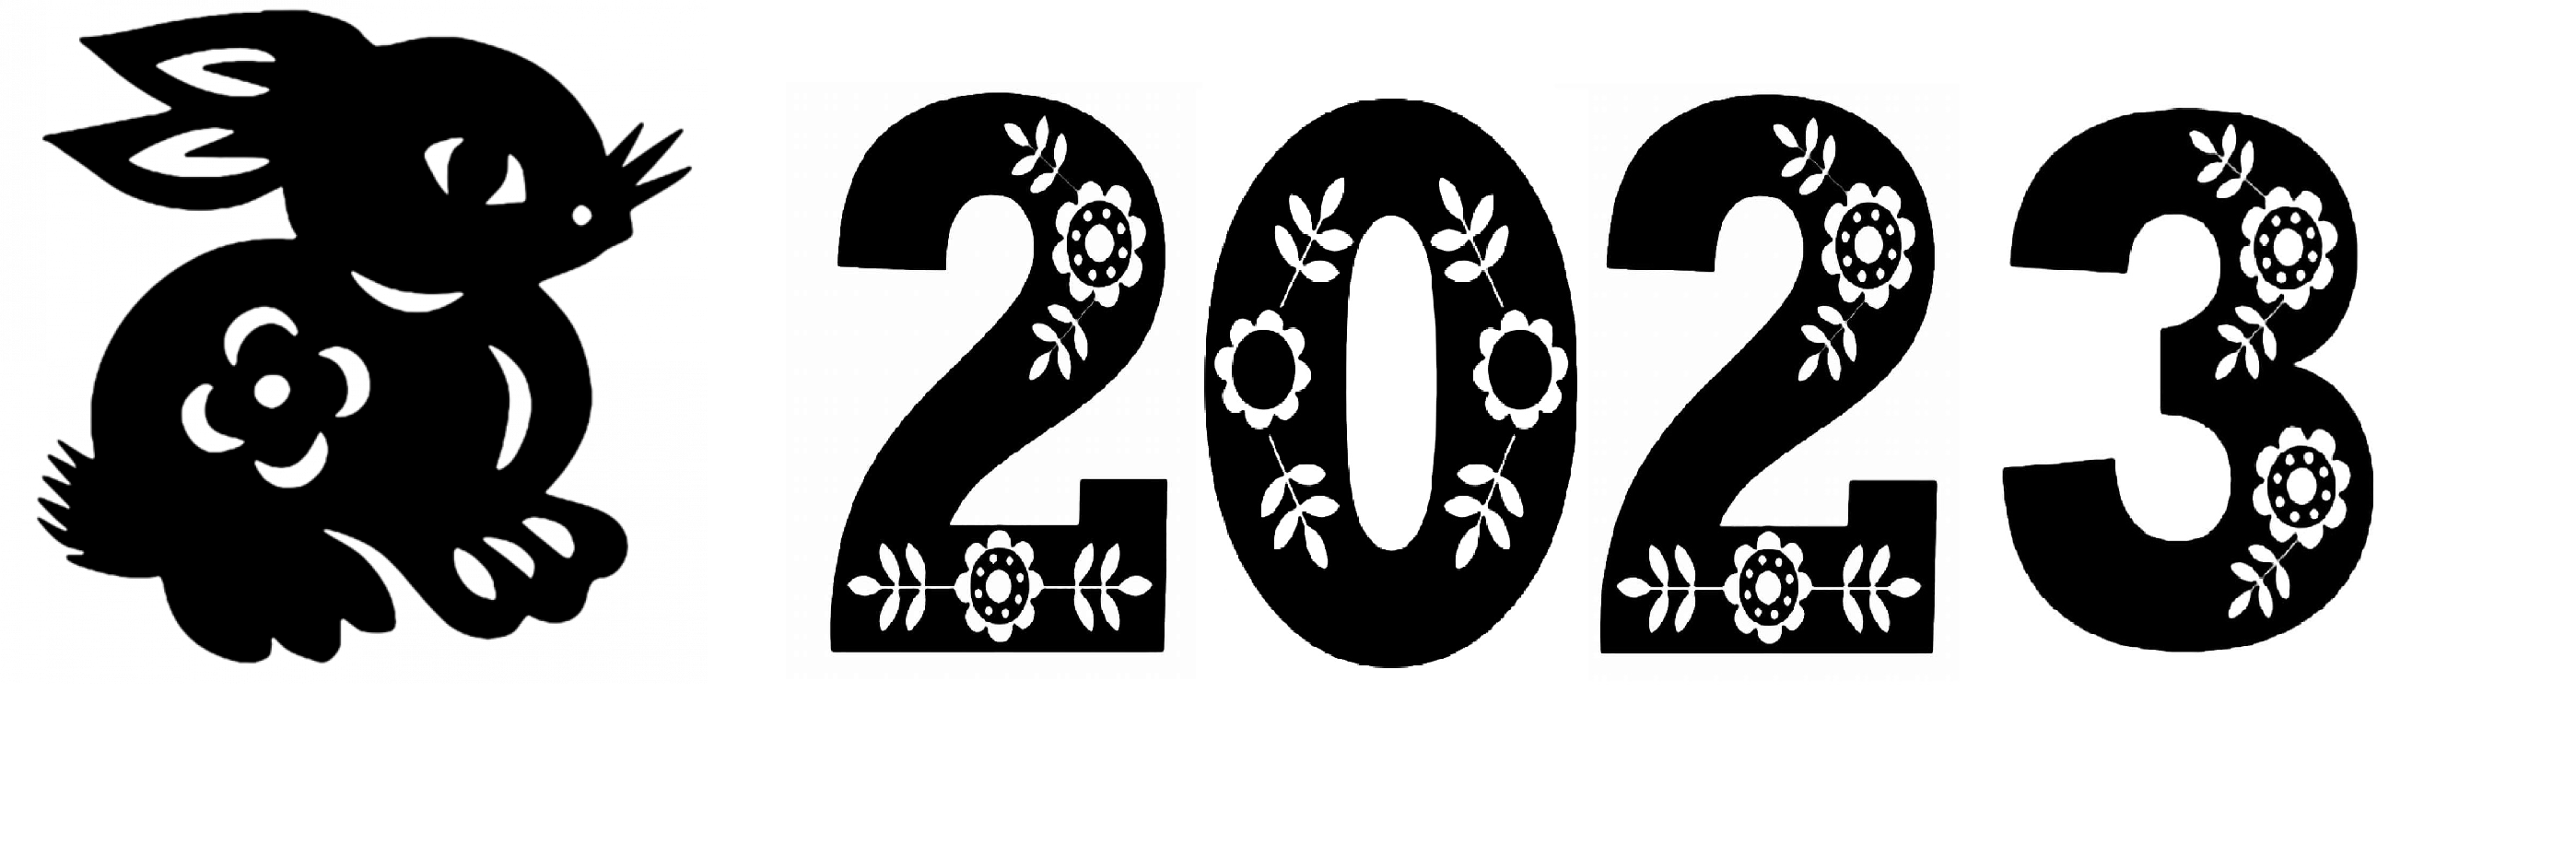 Шаблоны 2023 года. Новогодние трафареты 2023 год. Новогодние цифры. Трафареты на новый год 2023. Вытынанки на окна цифры.